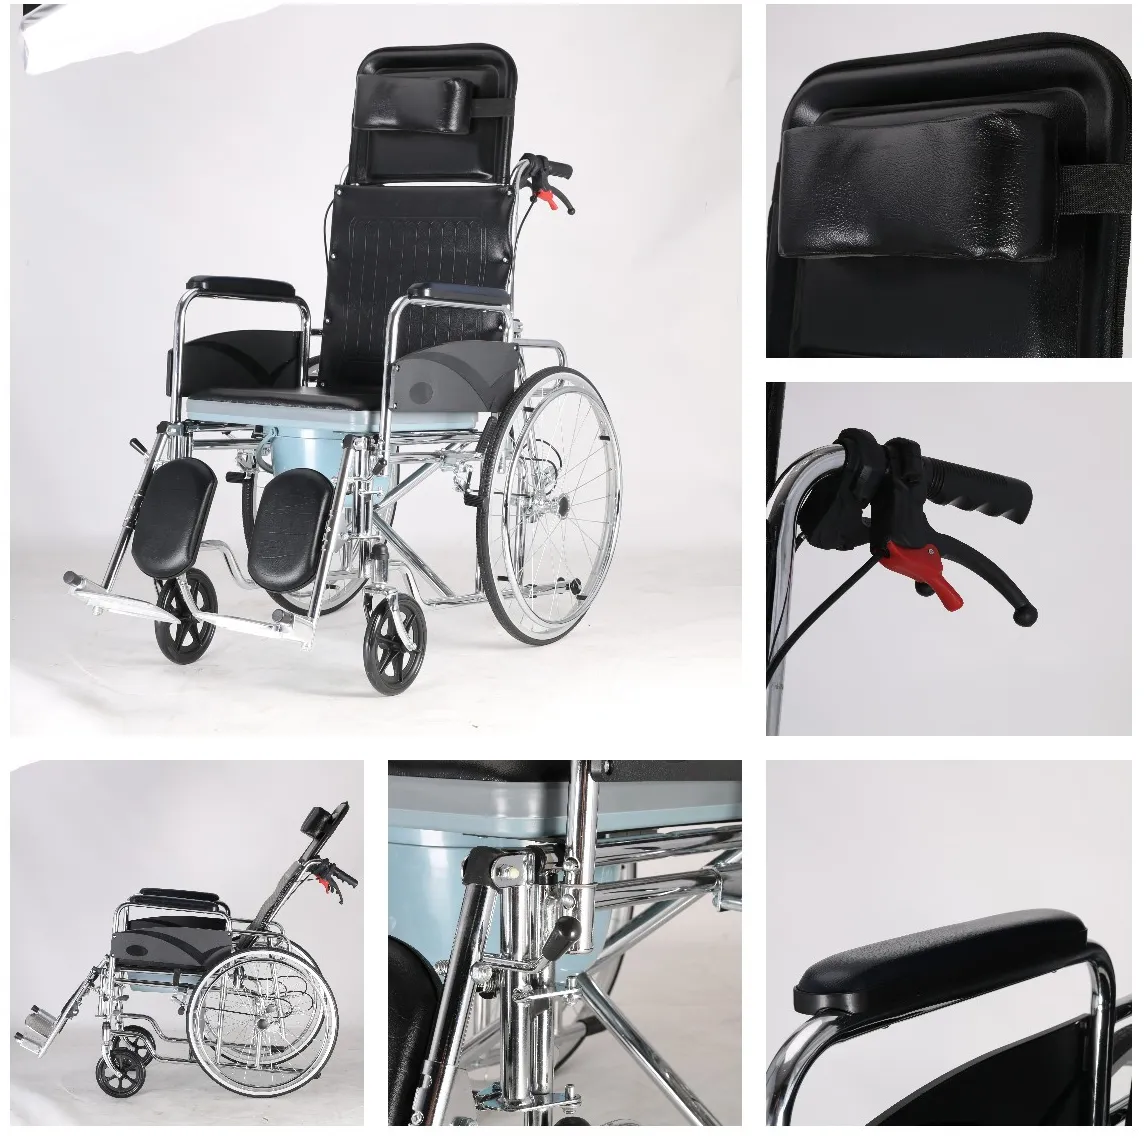 Reclining High Back Fold Up Wheelchair